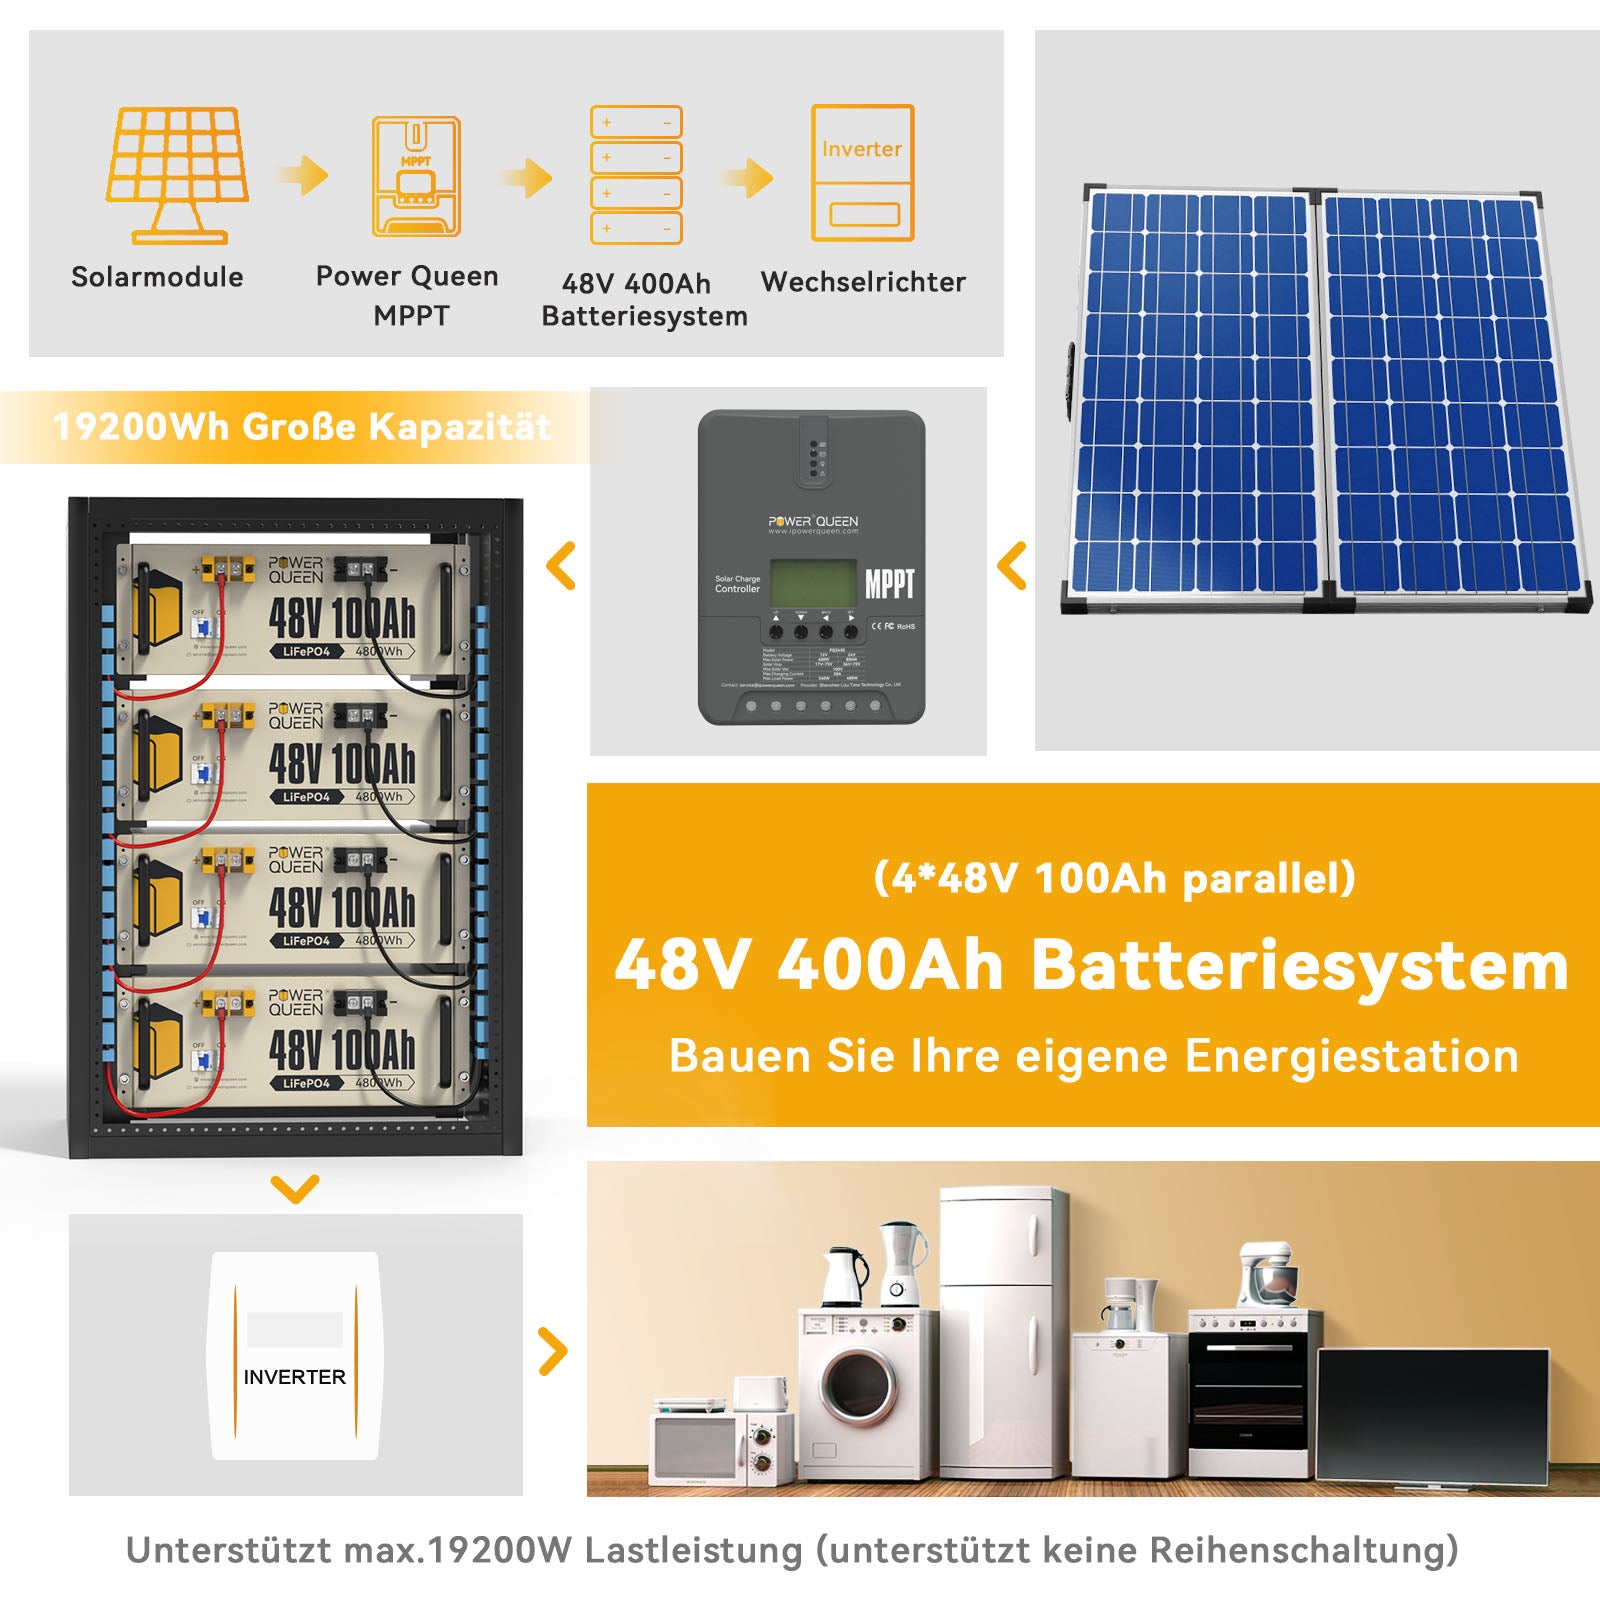 【0% BTW】Power Queen 48V 100Ah LiFePO4-batterij, geïntegreerd 100A BMS